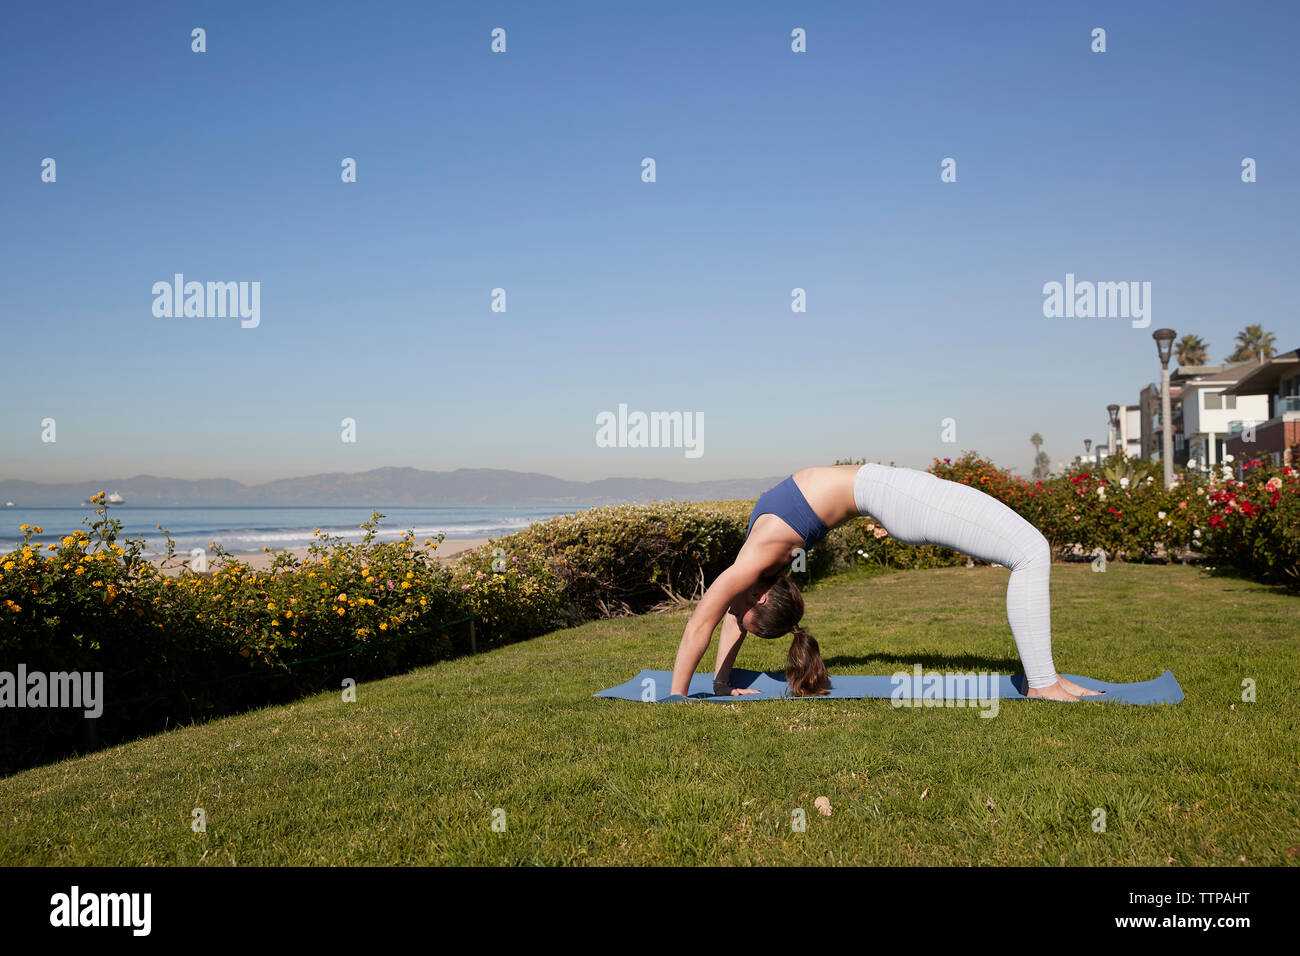 Full length of woman bending over backwards on exercise mat against clear sky Stock Photo